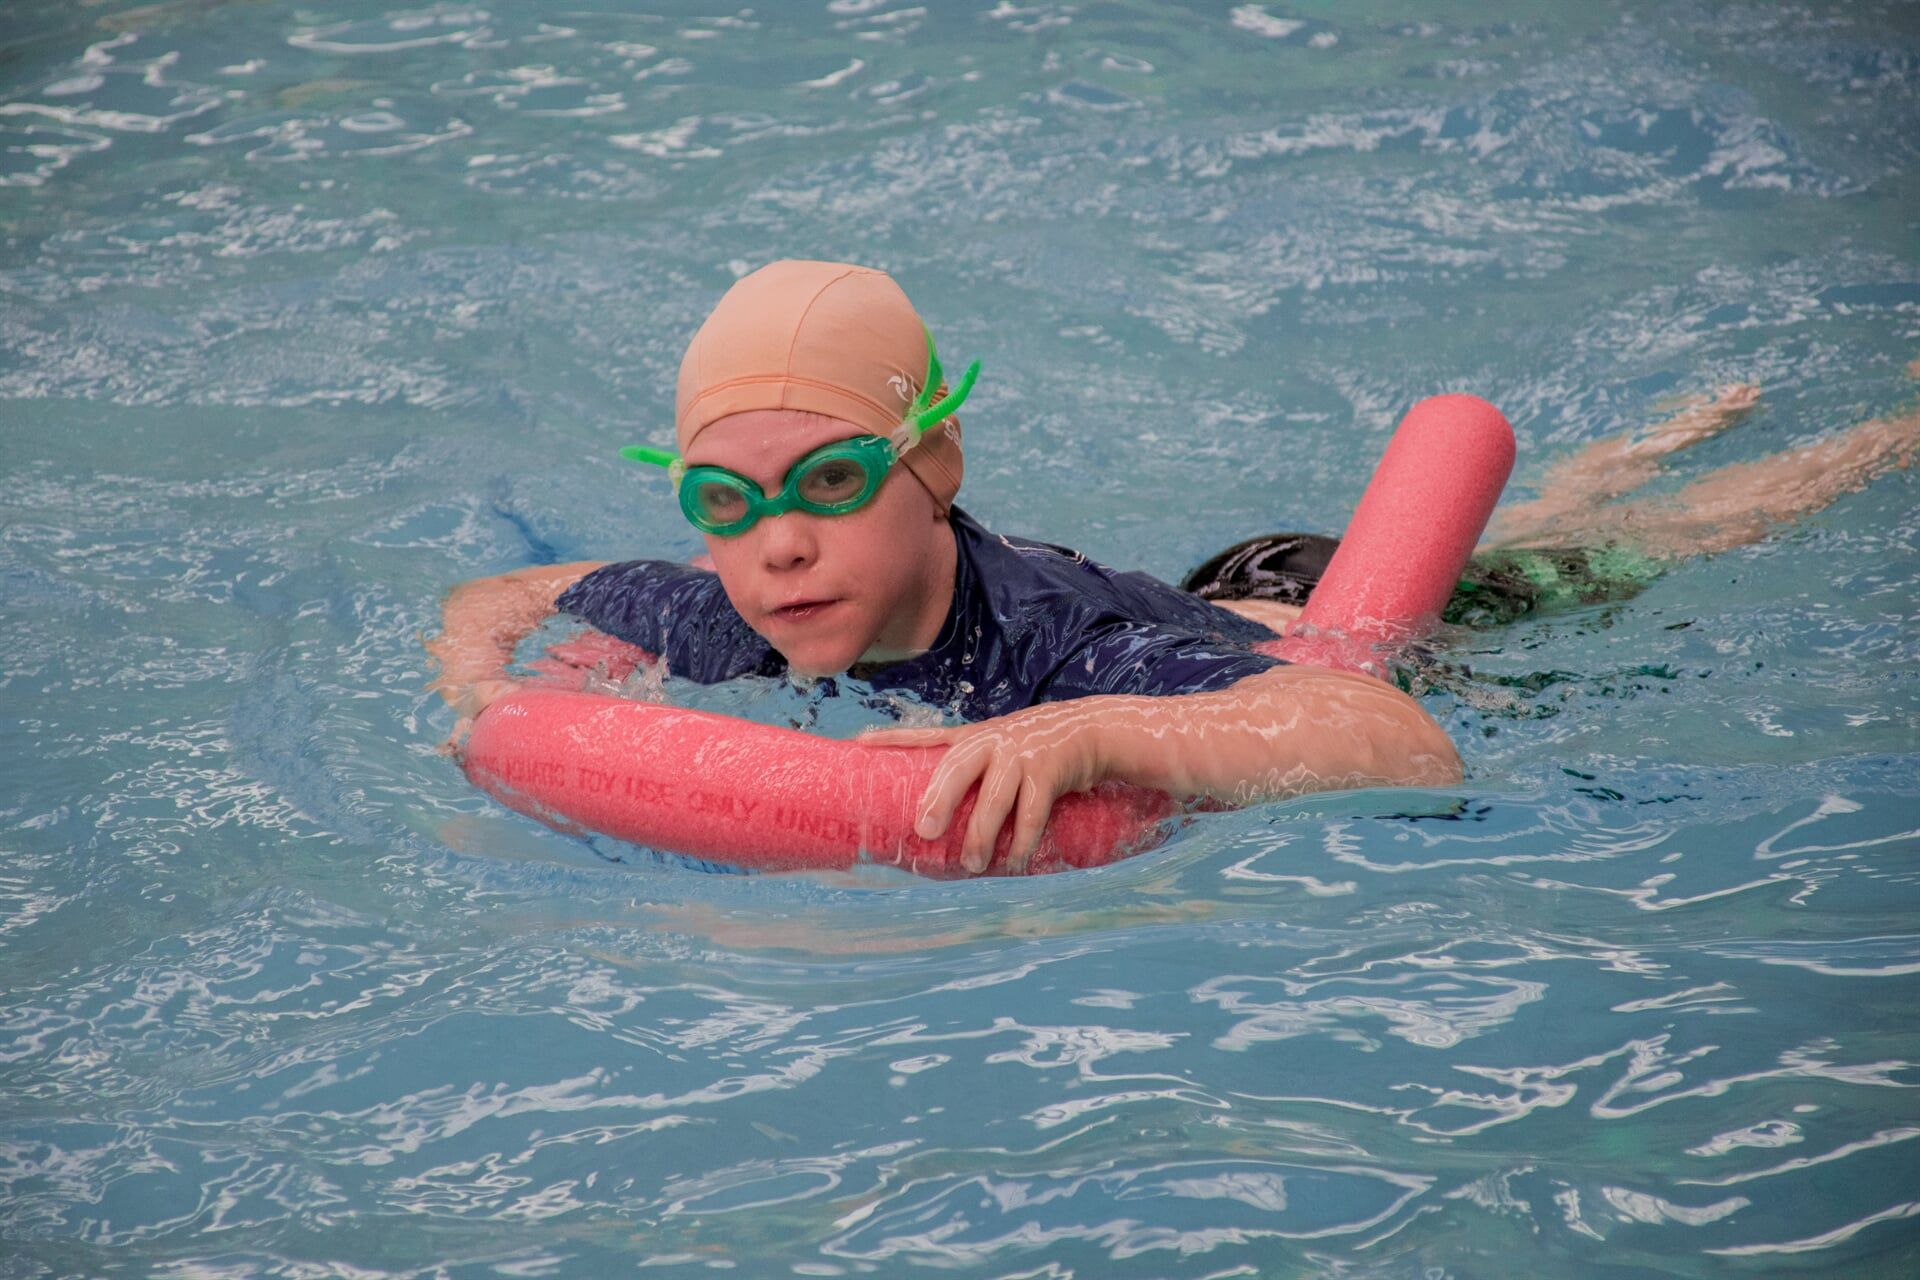 Kid on a Pool Noodle — Swim School in Barney Point, QLD